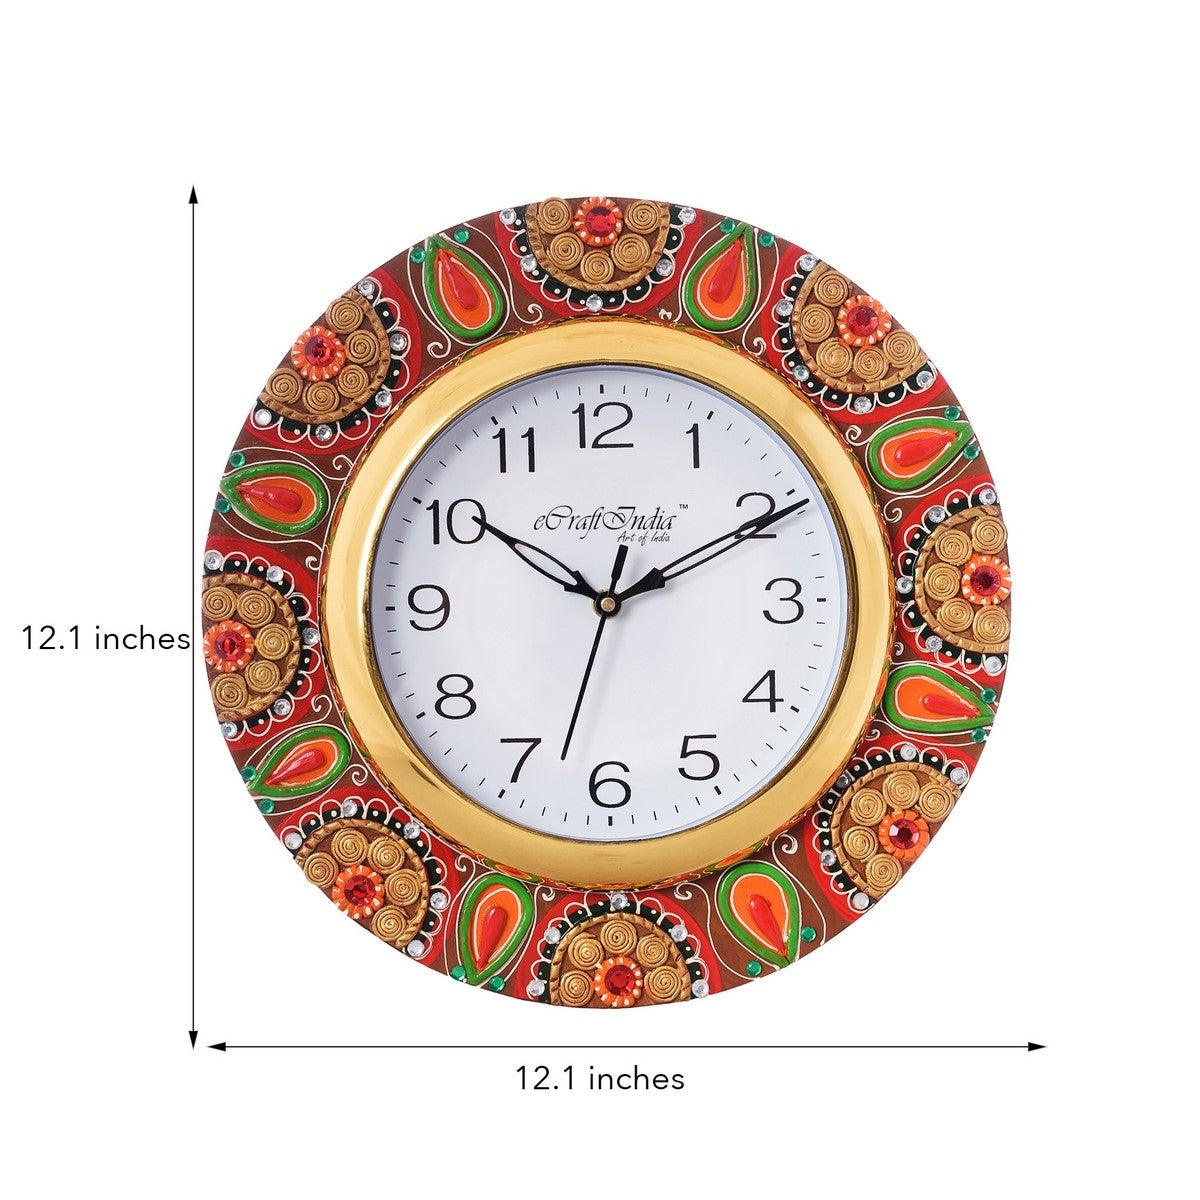 Crystal Studded Embellish Handicrafted Round Shape Papier-Mache Wooden Wall Clock 2